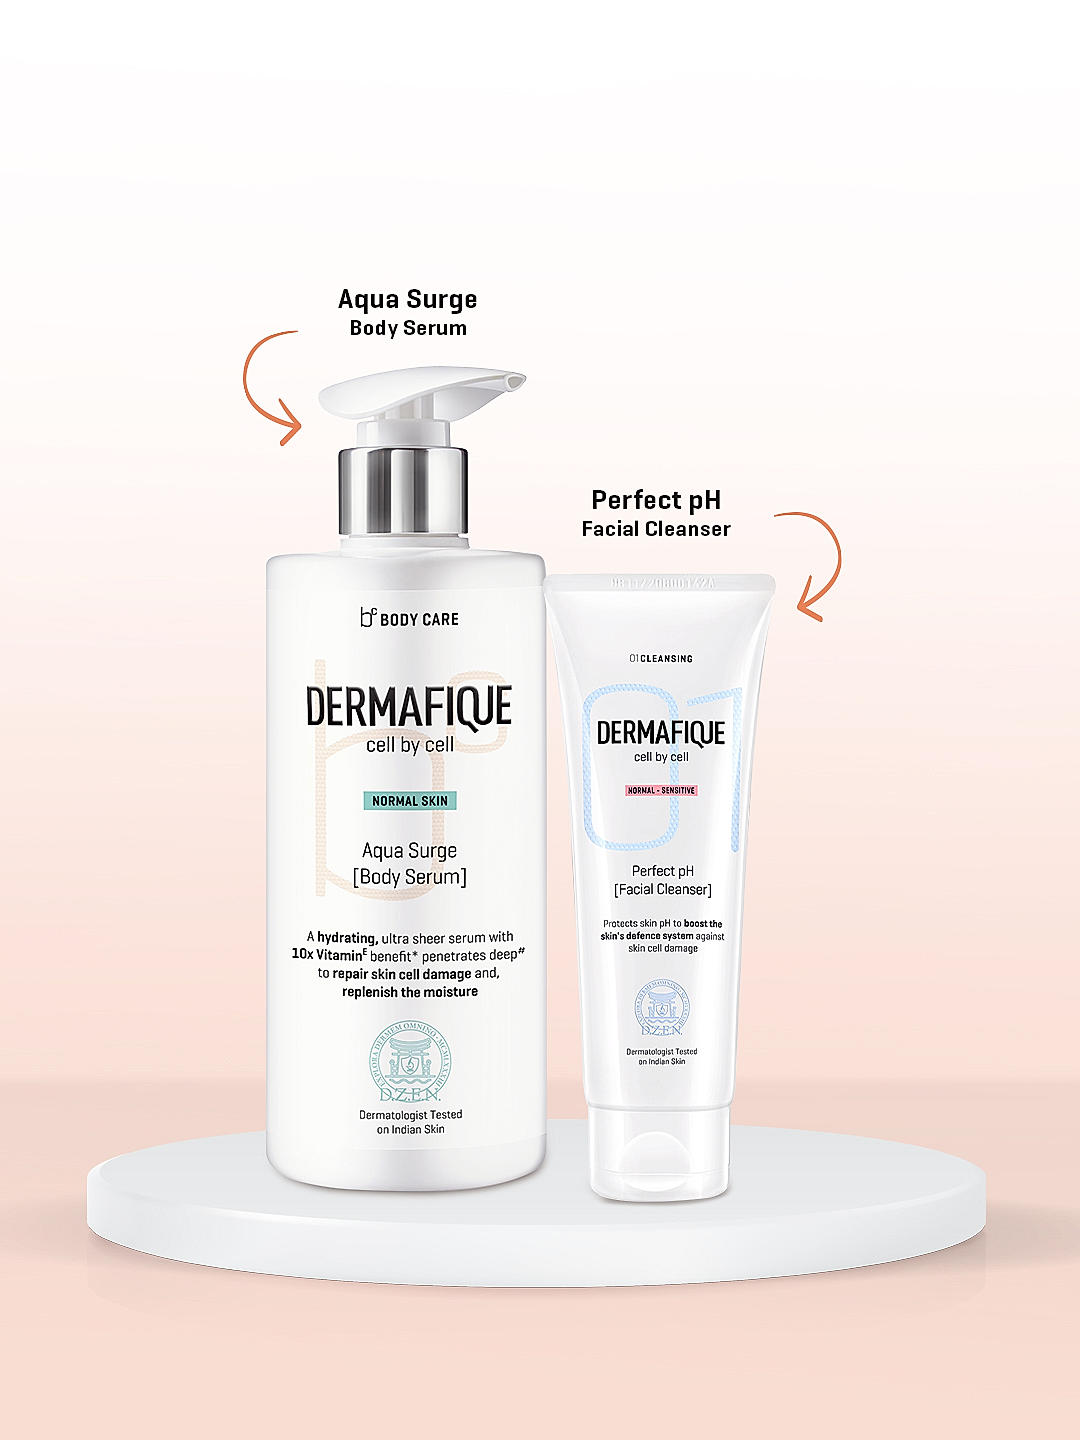 Buy Aqua Surge [Body Serum] and Get Perfect pH [Facial Cleanser] Free